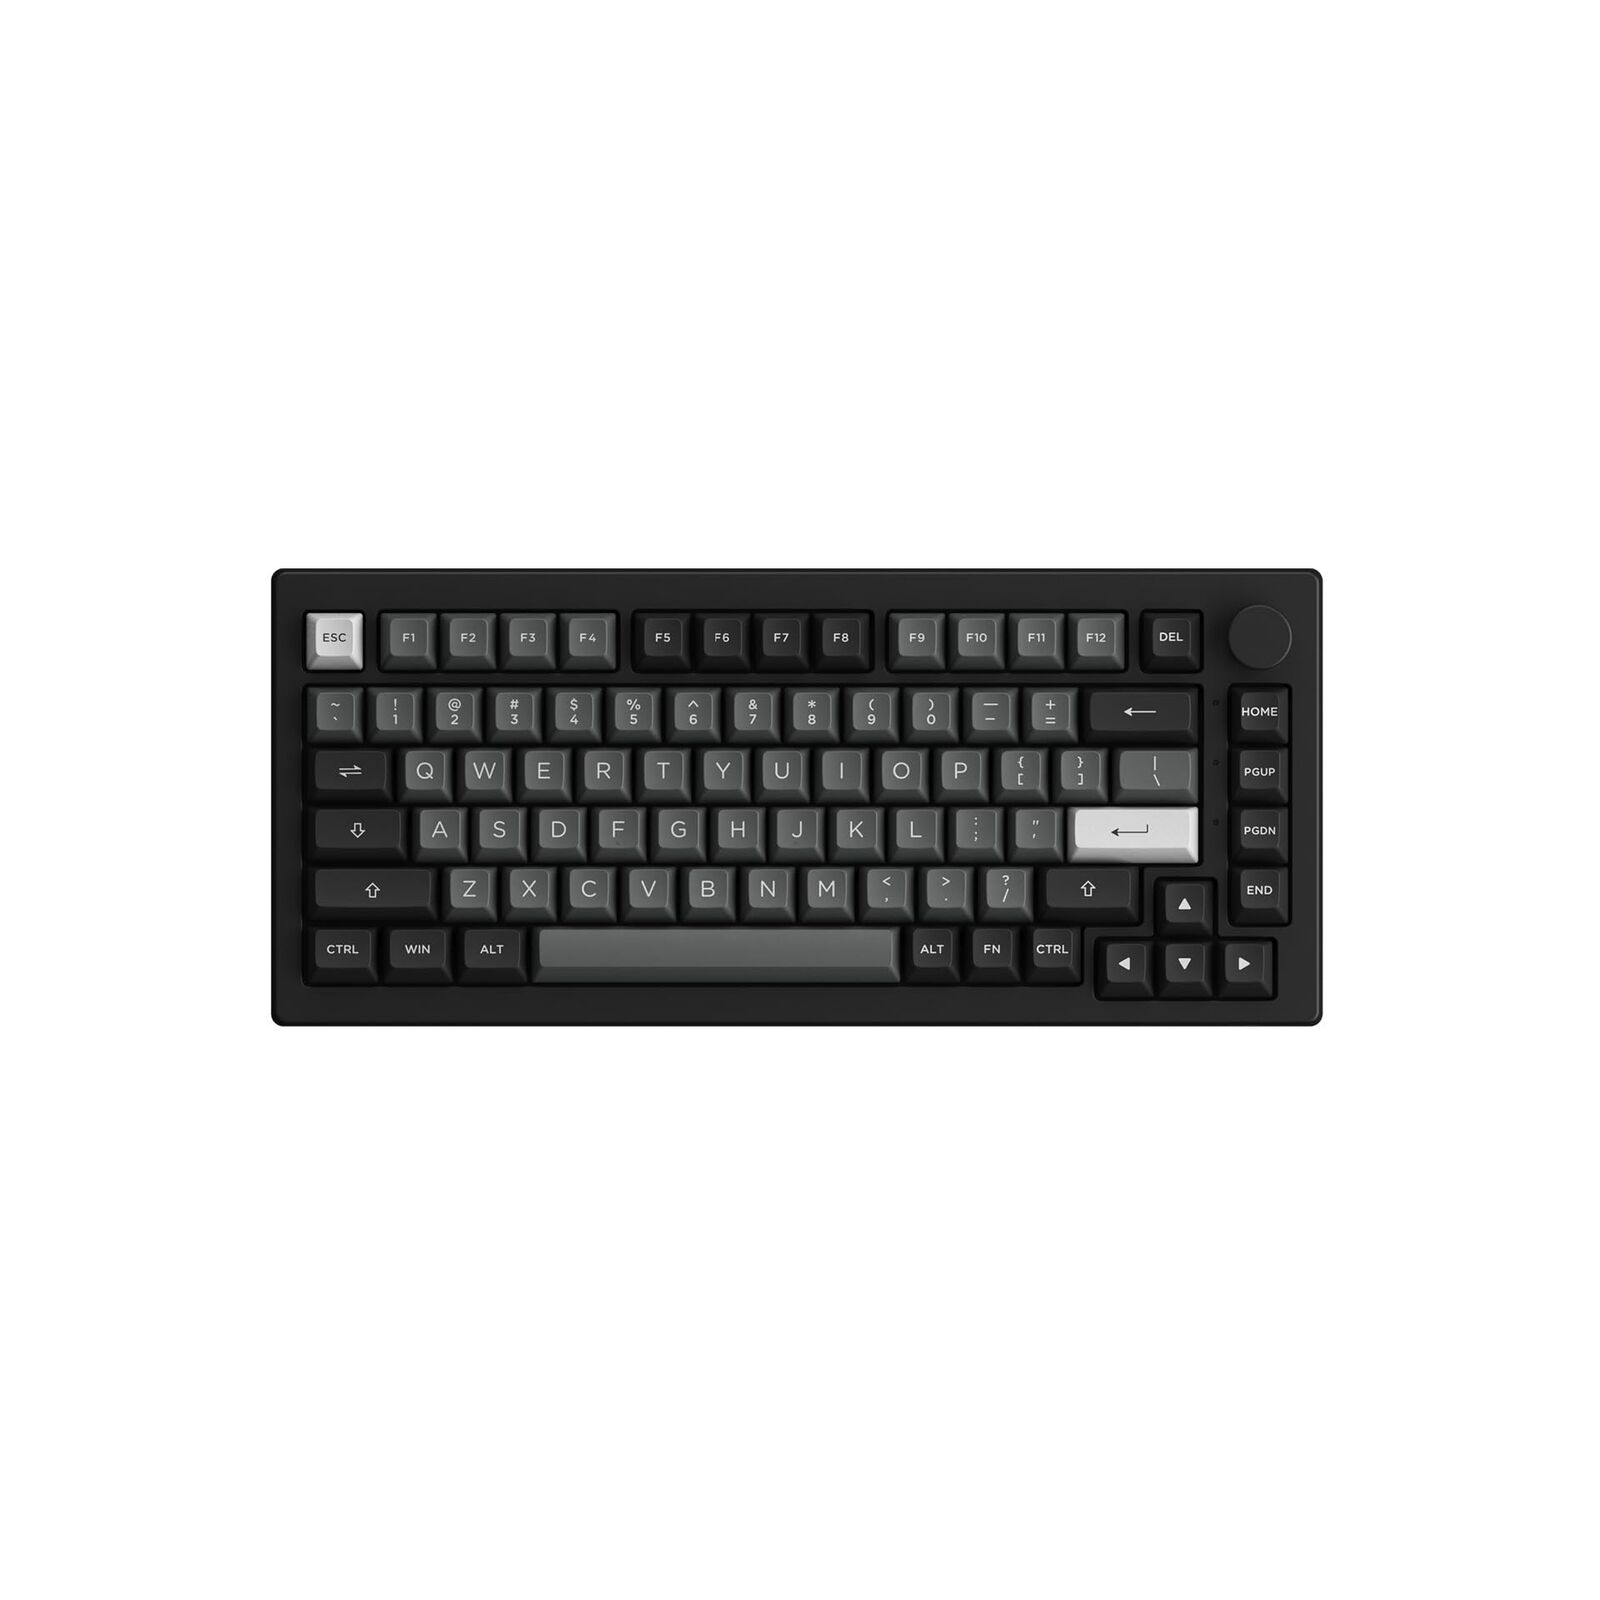 Akko 5075B Plus Mechanical Keyboard 75% Percent RGB Hot-swappable Keyboard wi...